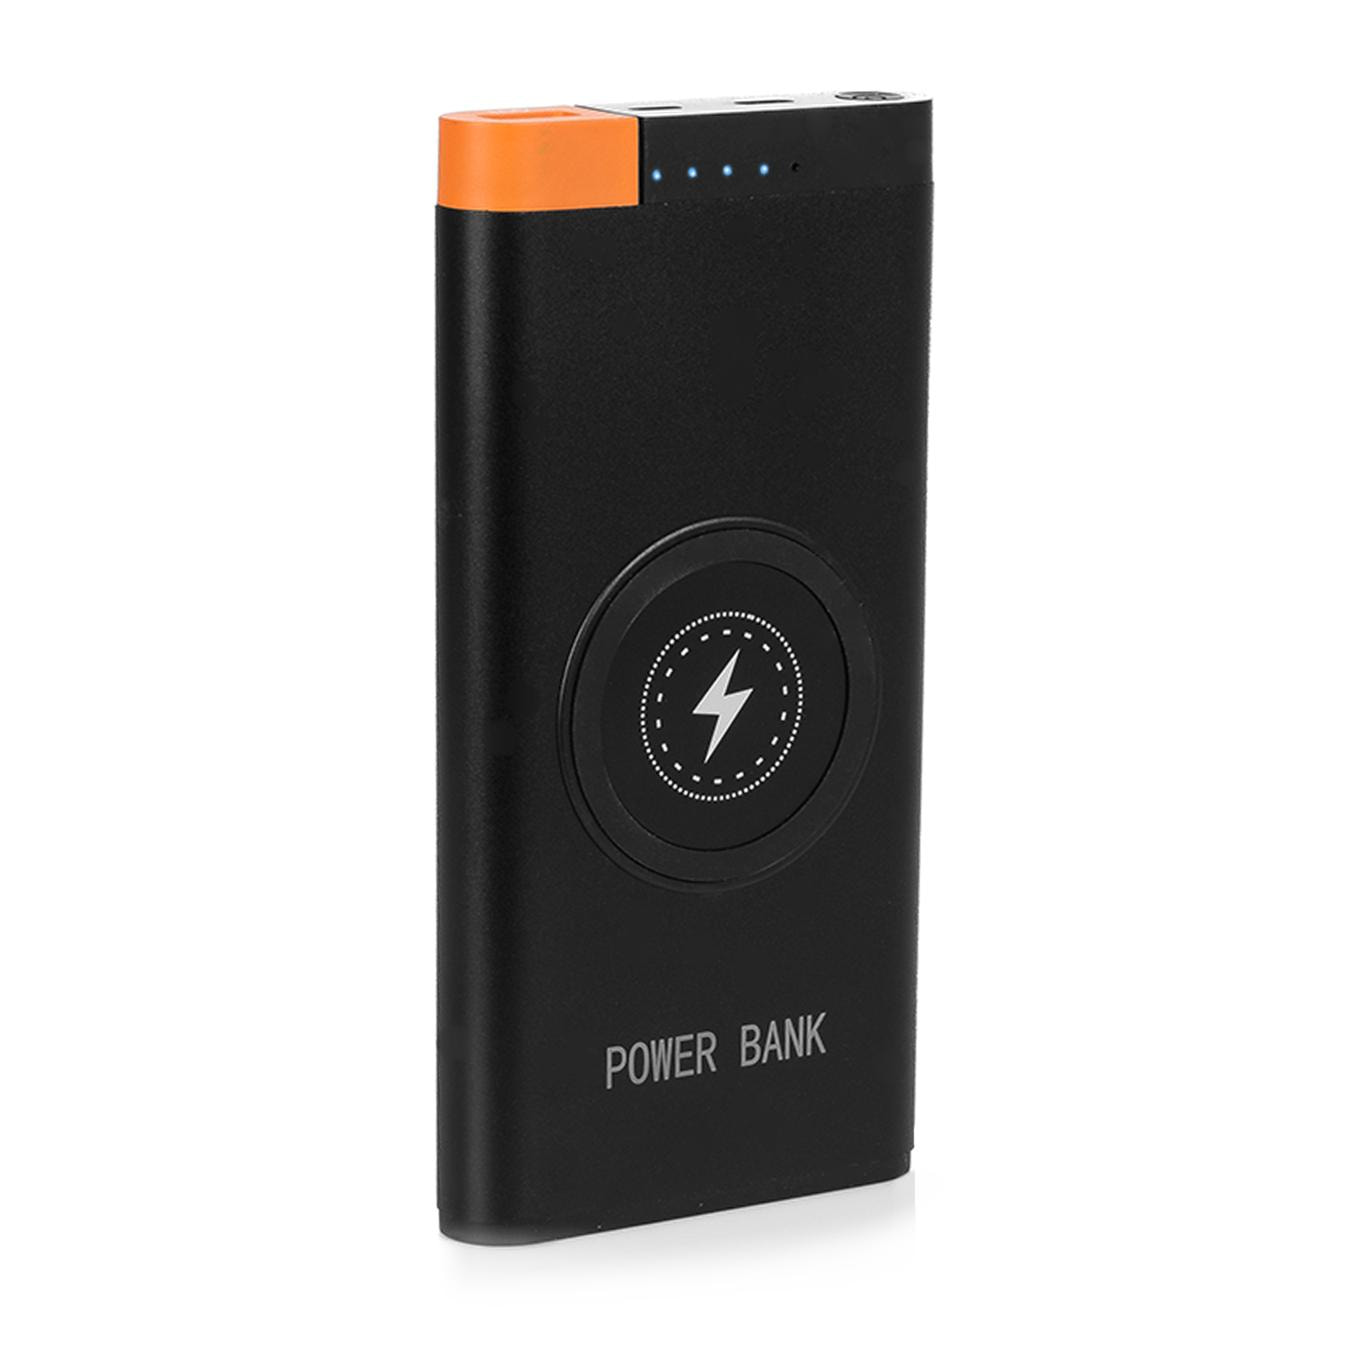 PowerBank P31 wireless Qi da 20.000 mAh con uscita USB da 2,1 A